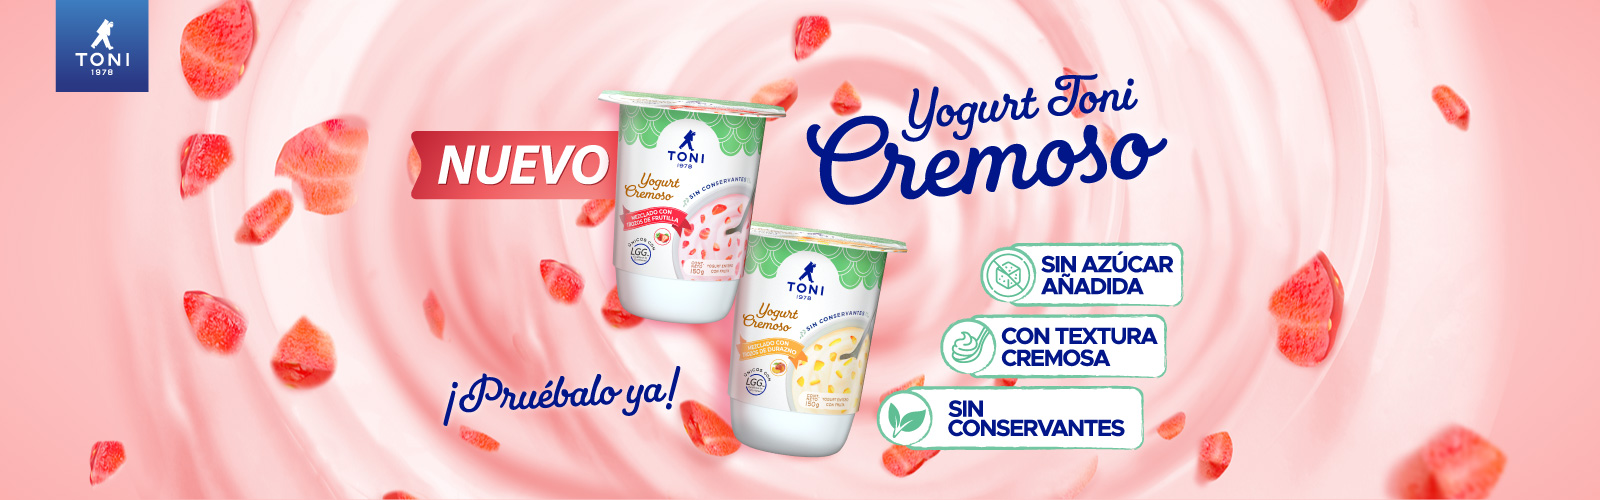 Yogurt Toni Cremoso